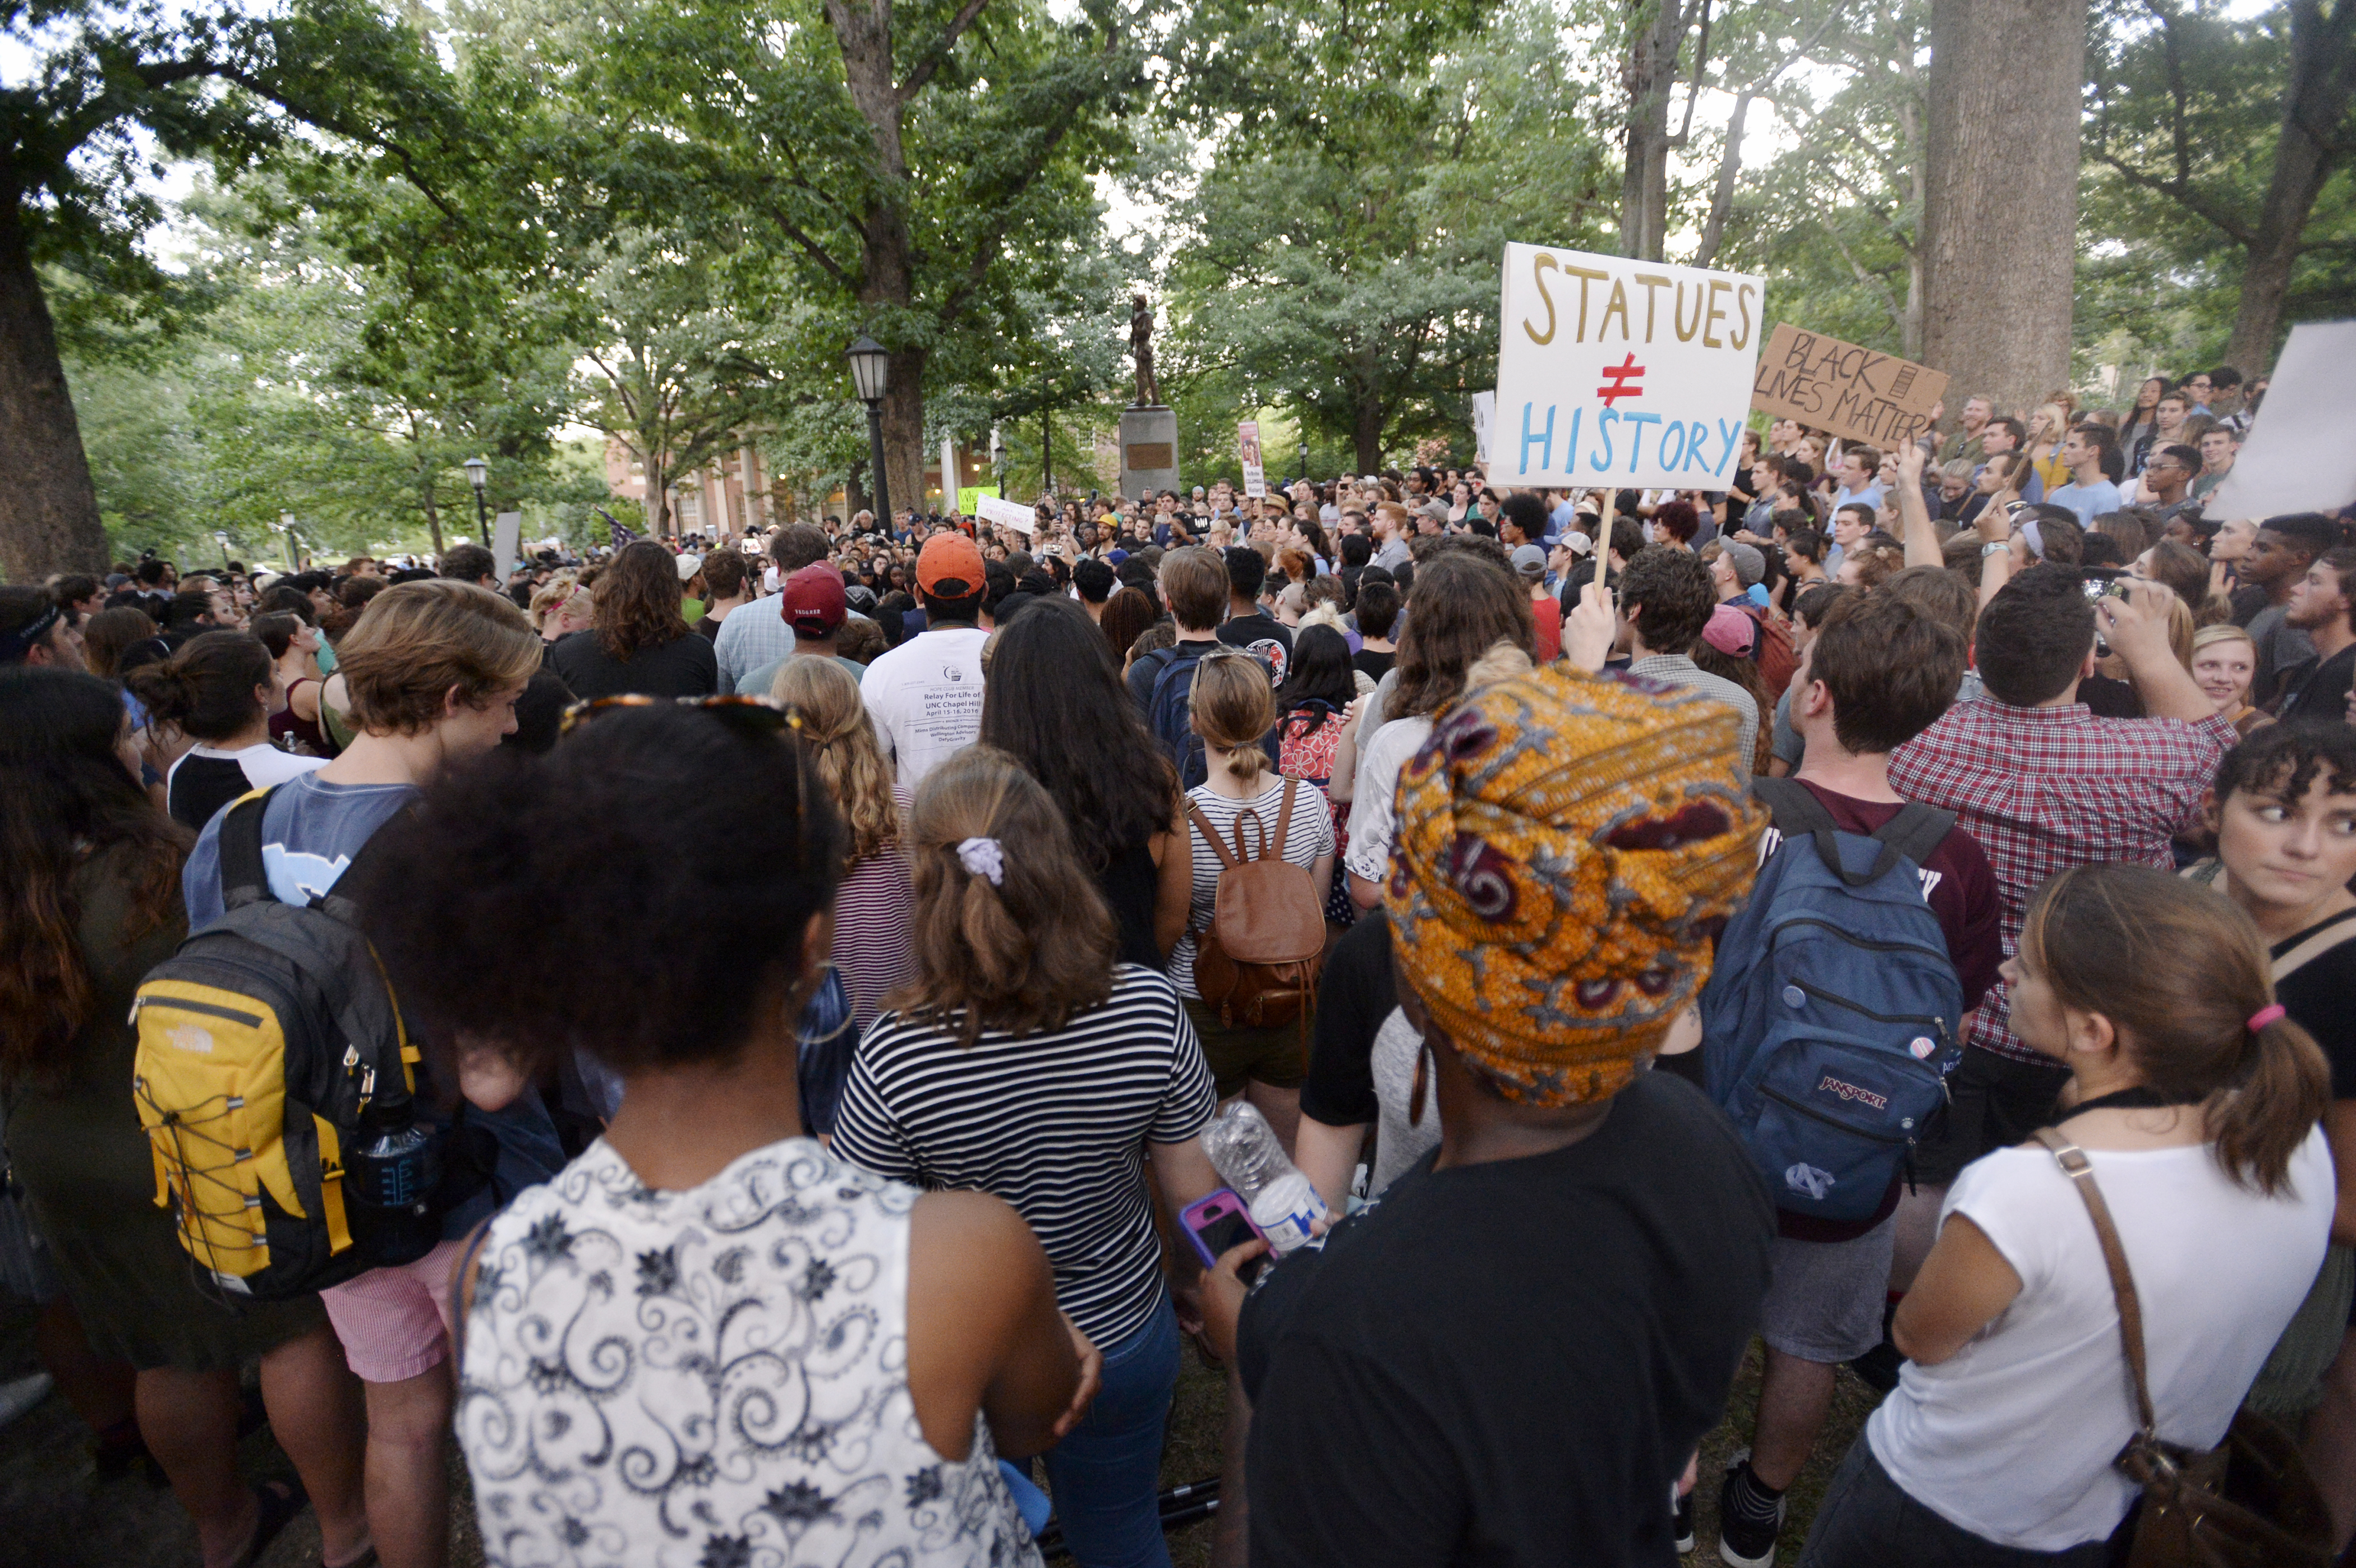 Rally Protesting UNC's Confederate Era Monument "Silent Sam" Held On Campus